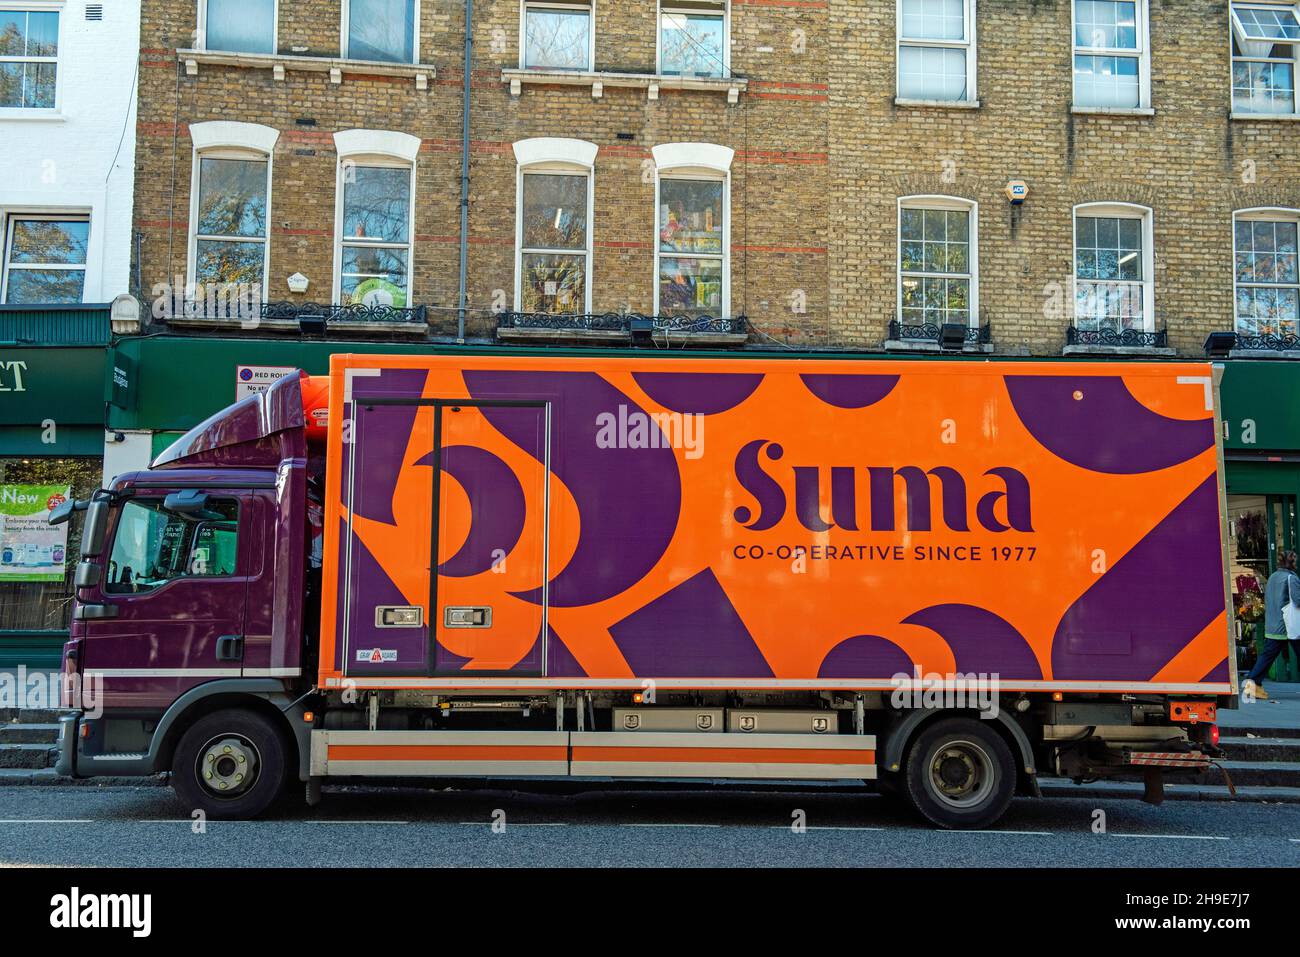 Suma Wholefoods Co-operative Lastwagen oder Lastwagen, die in der Upper Street, London Borough of Islington, geparkt sind Stockfoto